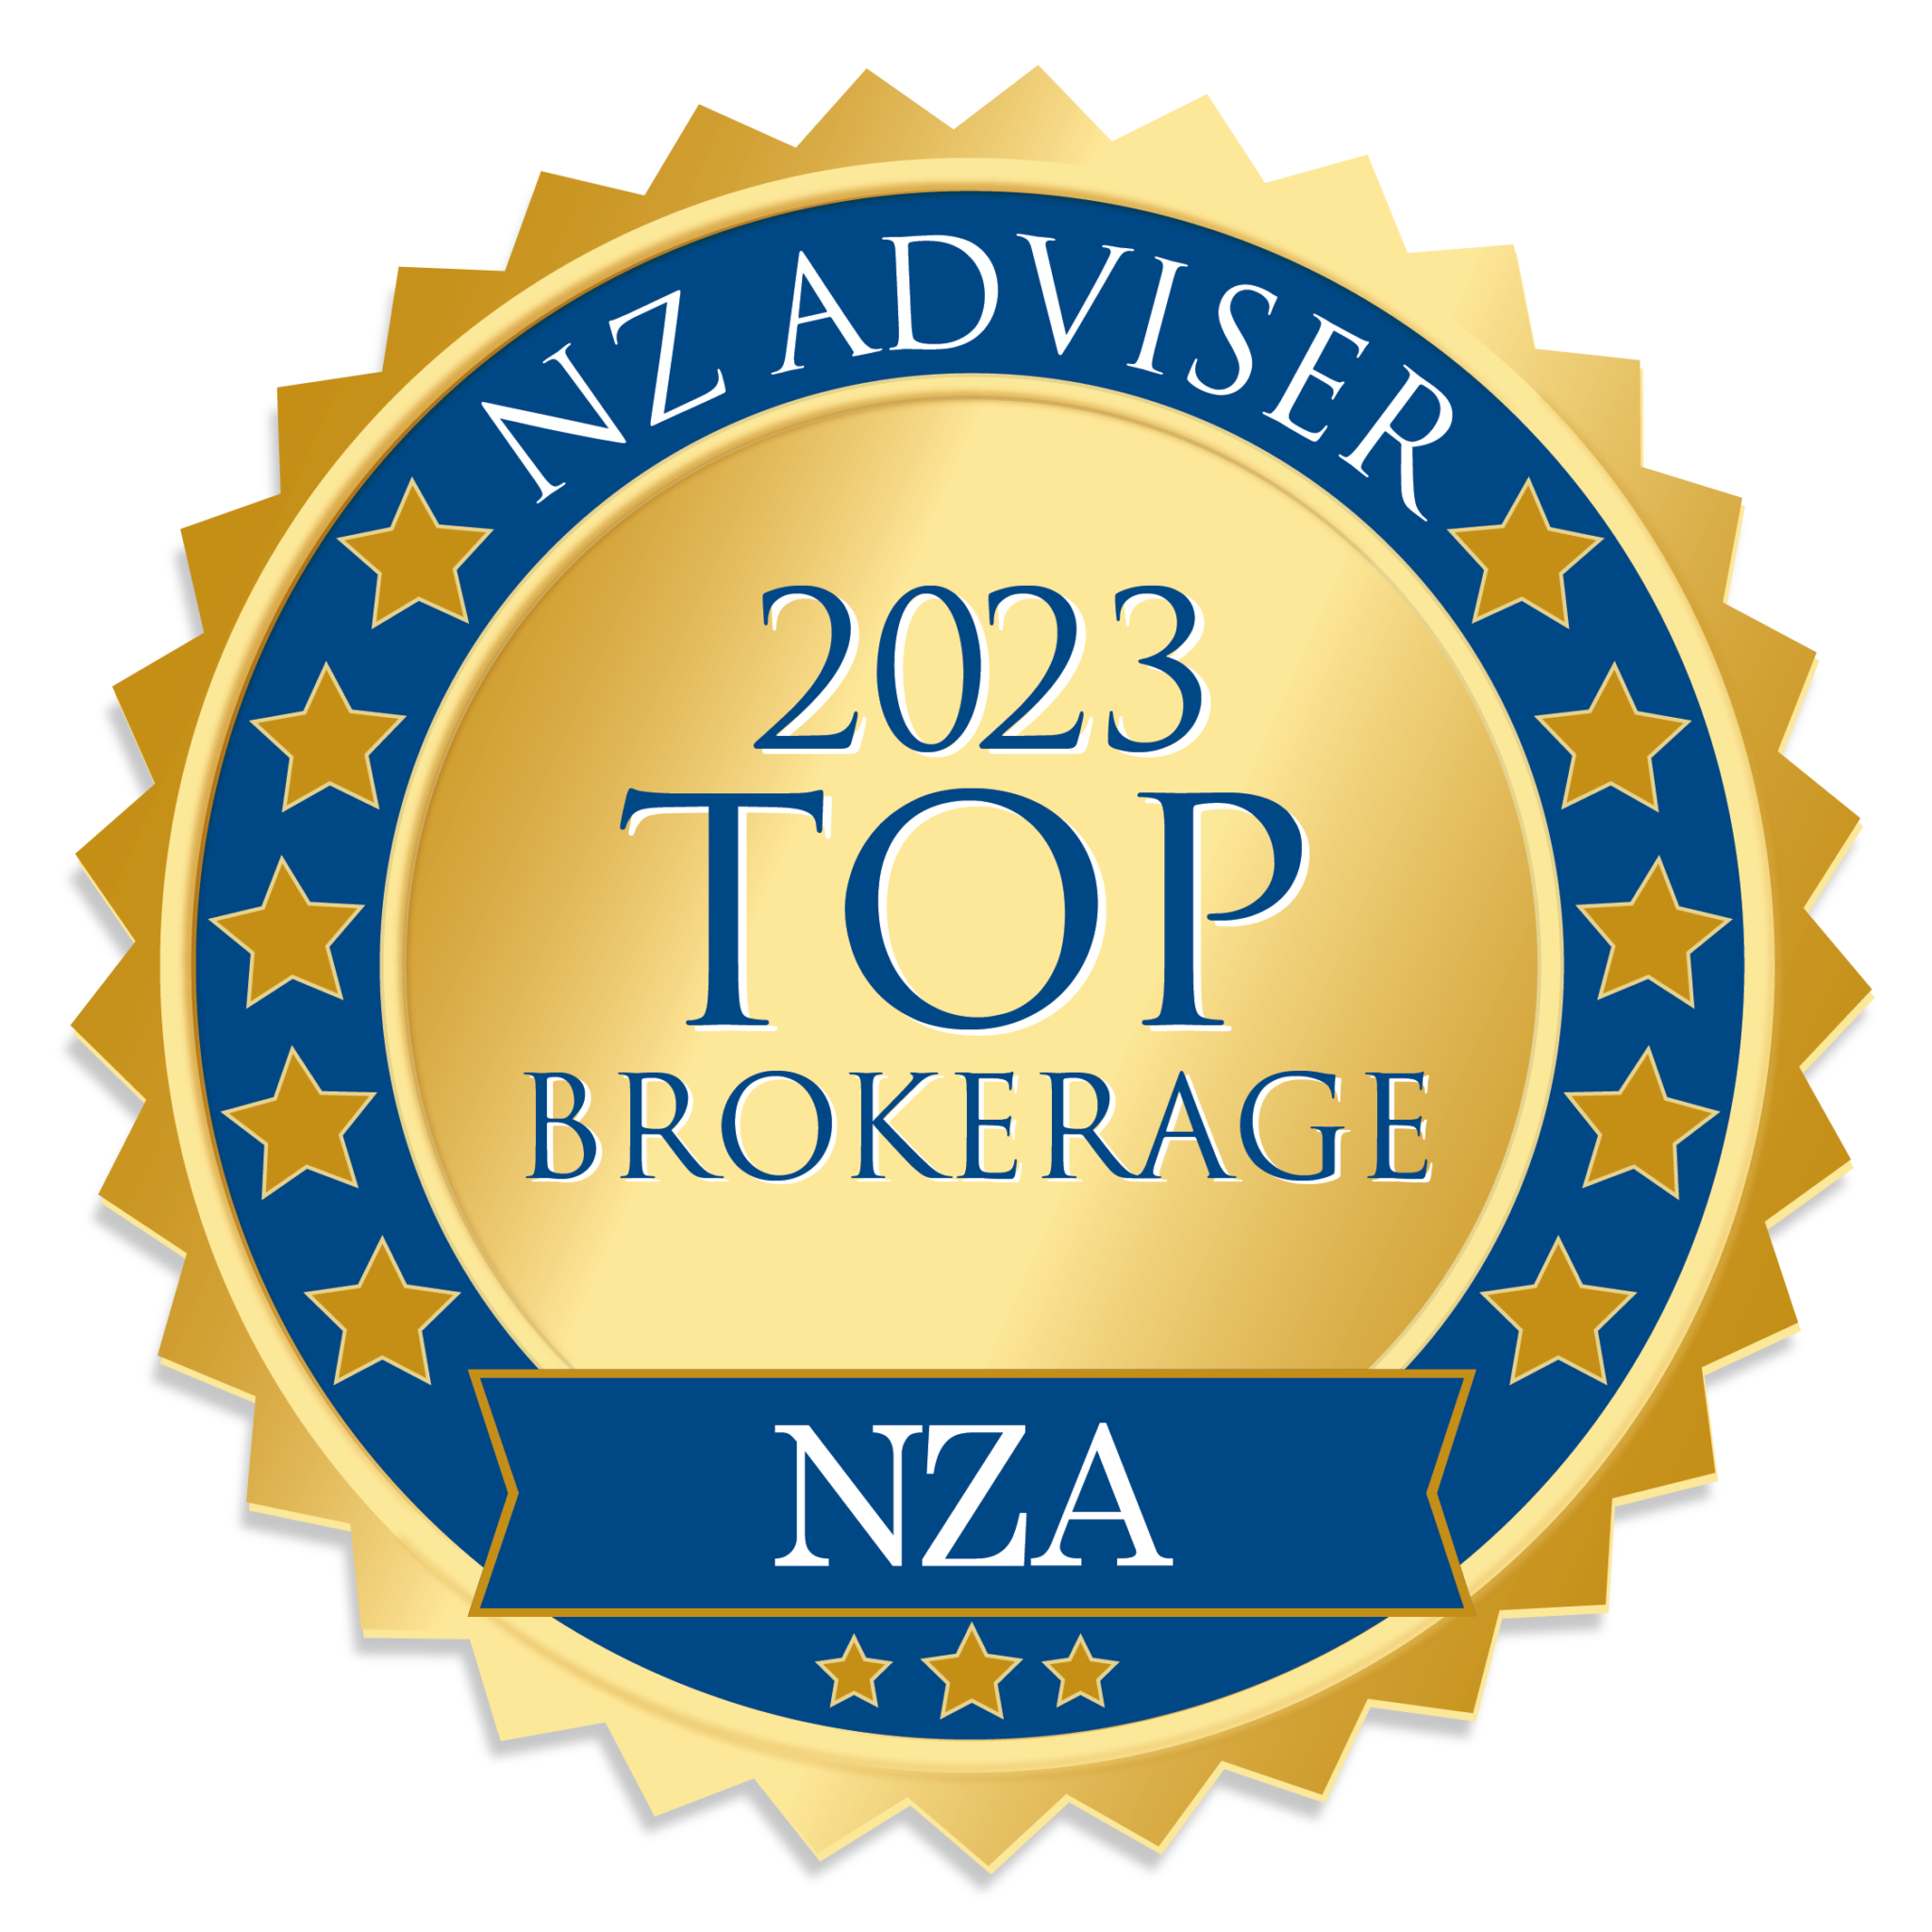 NZAD Top Brokerage 2023 2048x2048 1